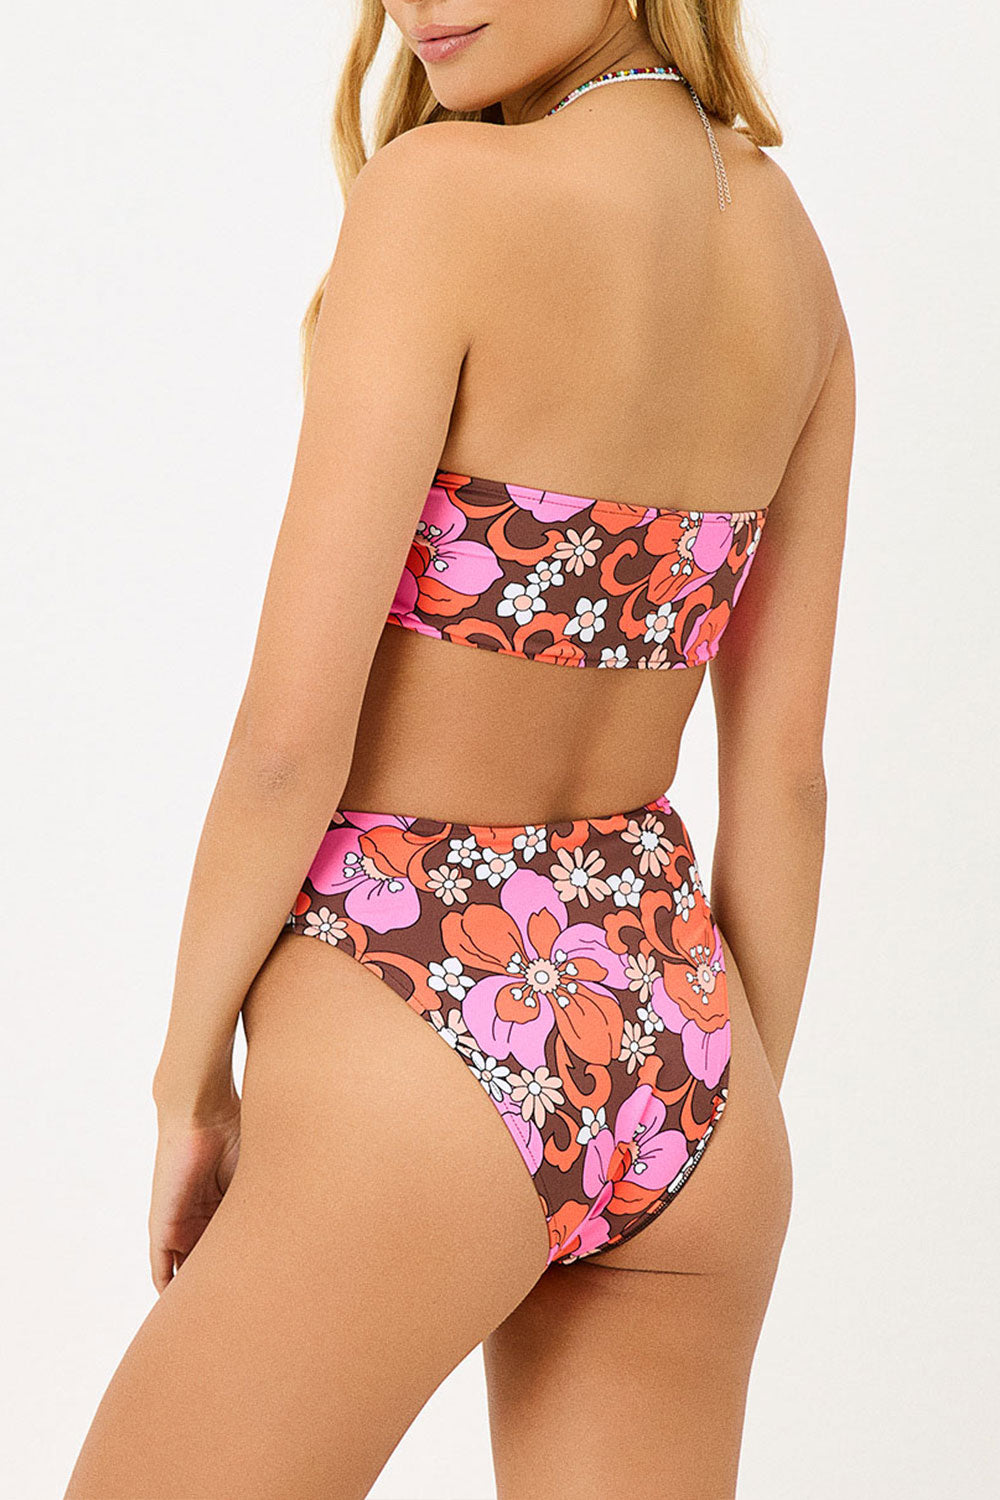 Jeanette Strapless Floral Bikini Top - Tropics